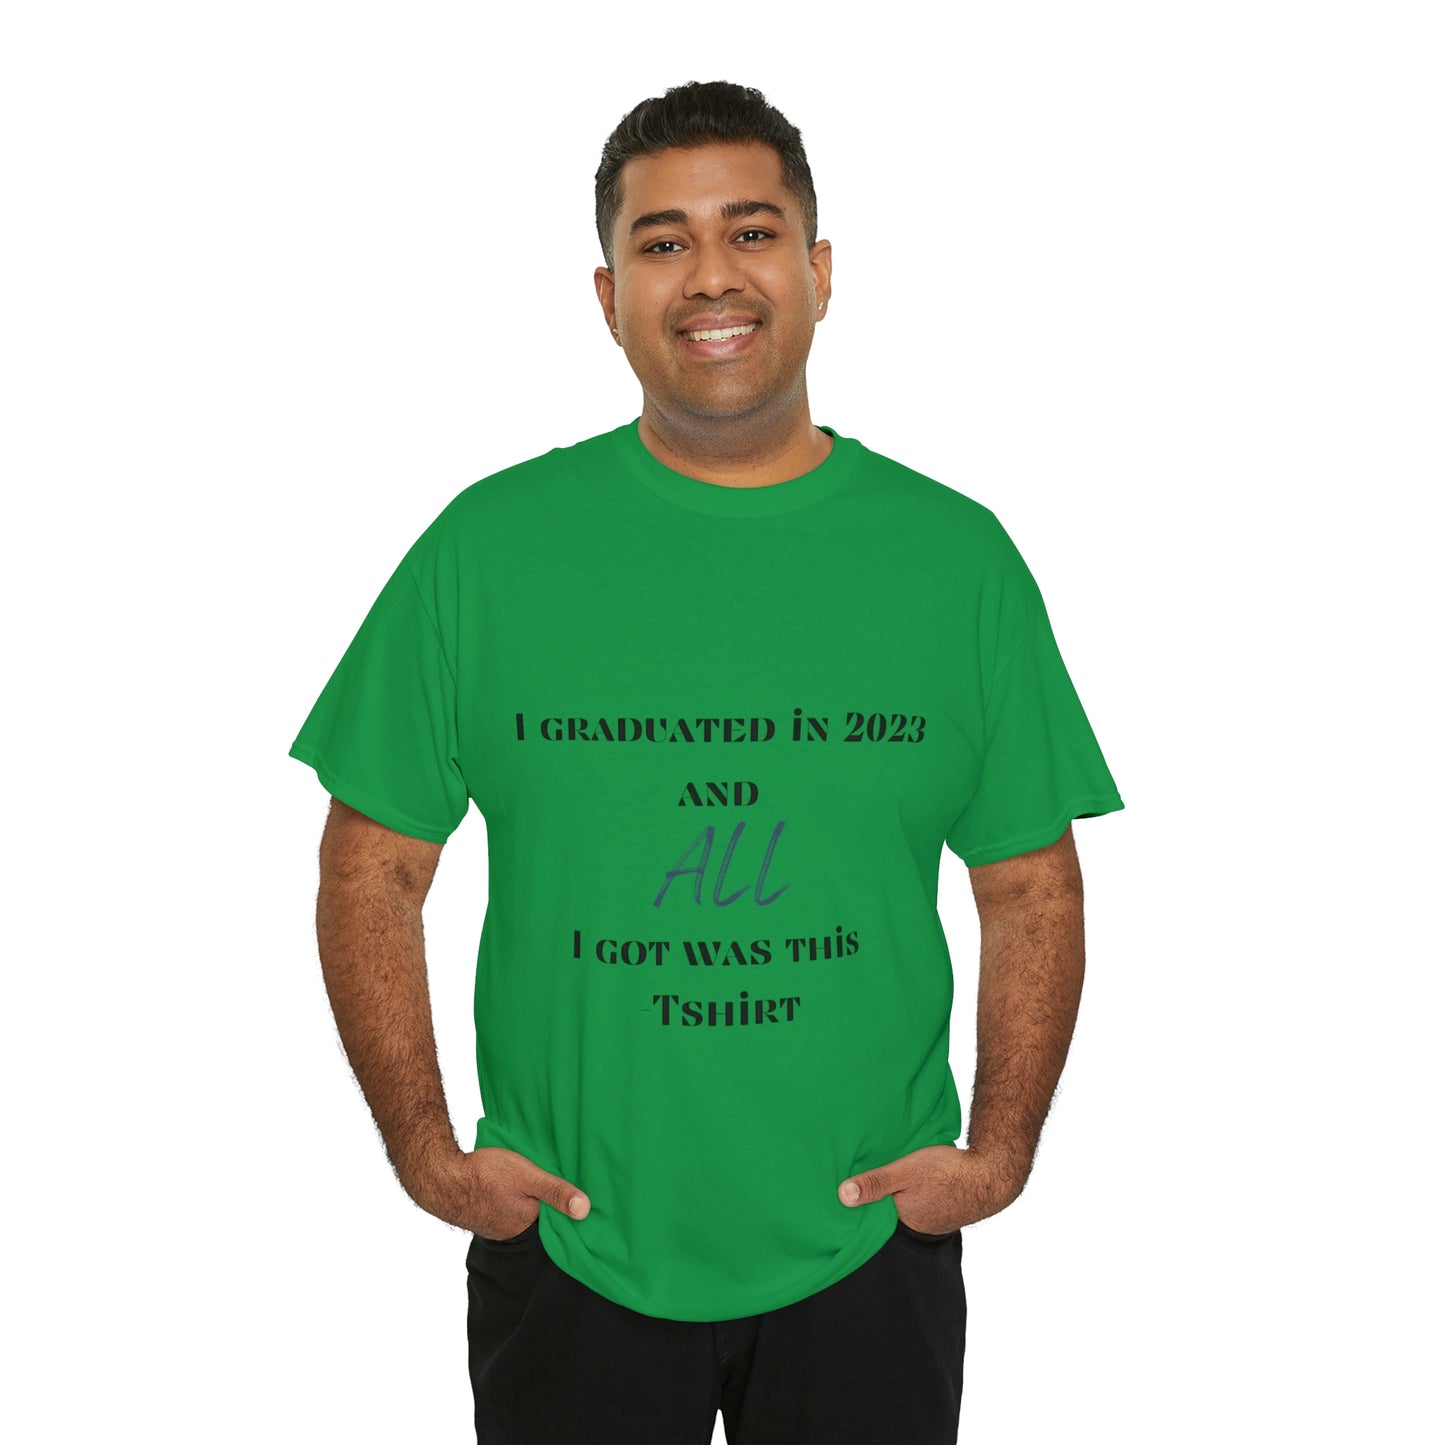 I Graduated and All I Got Was This T-shirt 2023 Graduation T-shirt